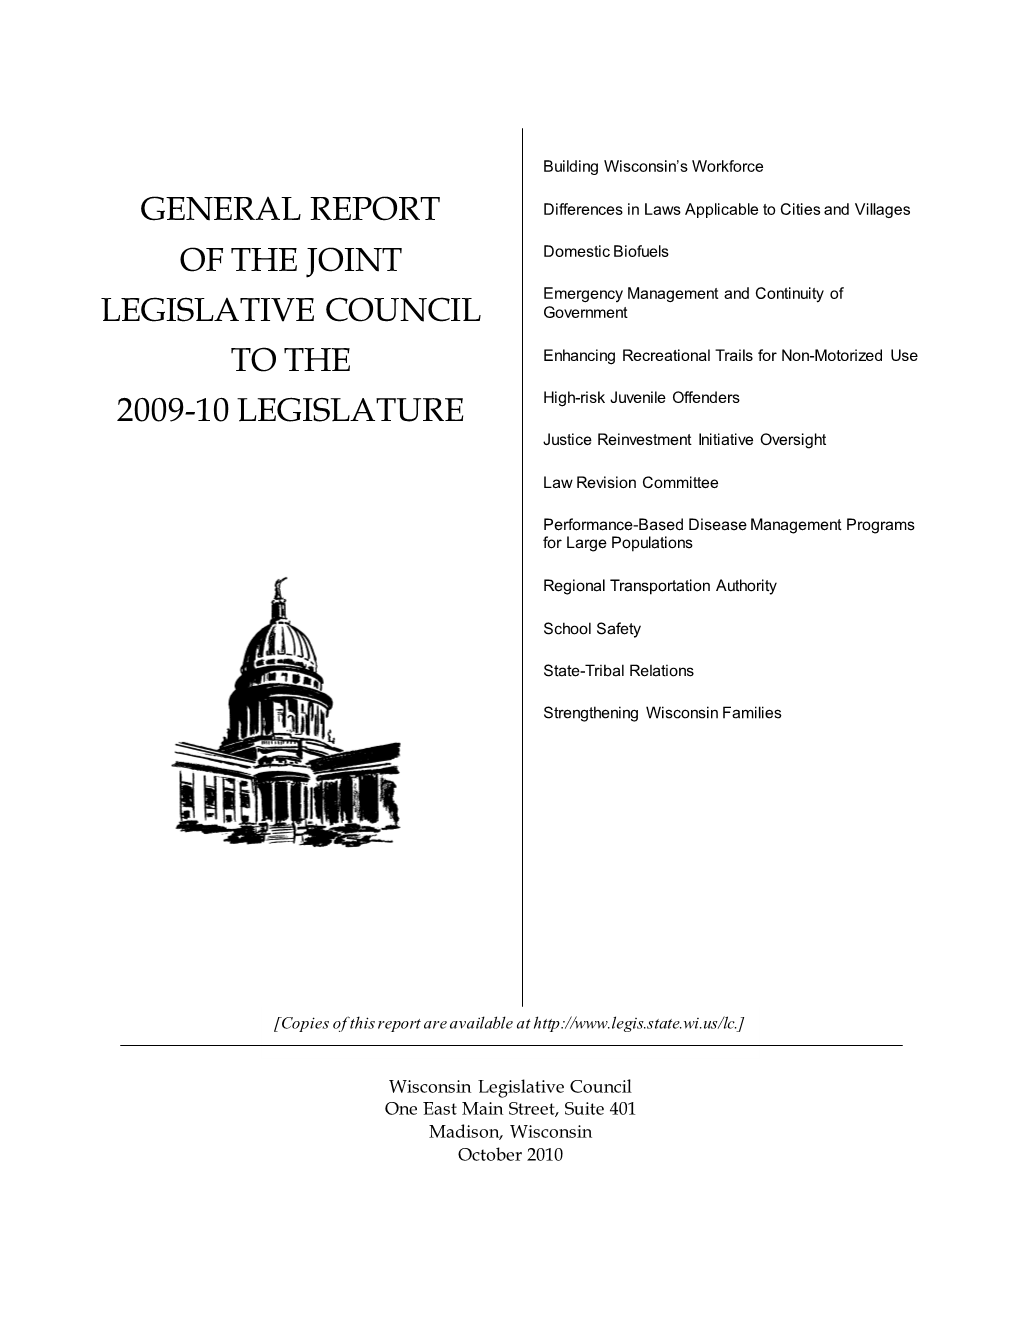 General Report of the Joint Legislative Council to the 2007-08 Legislature